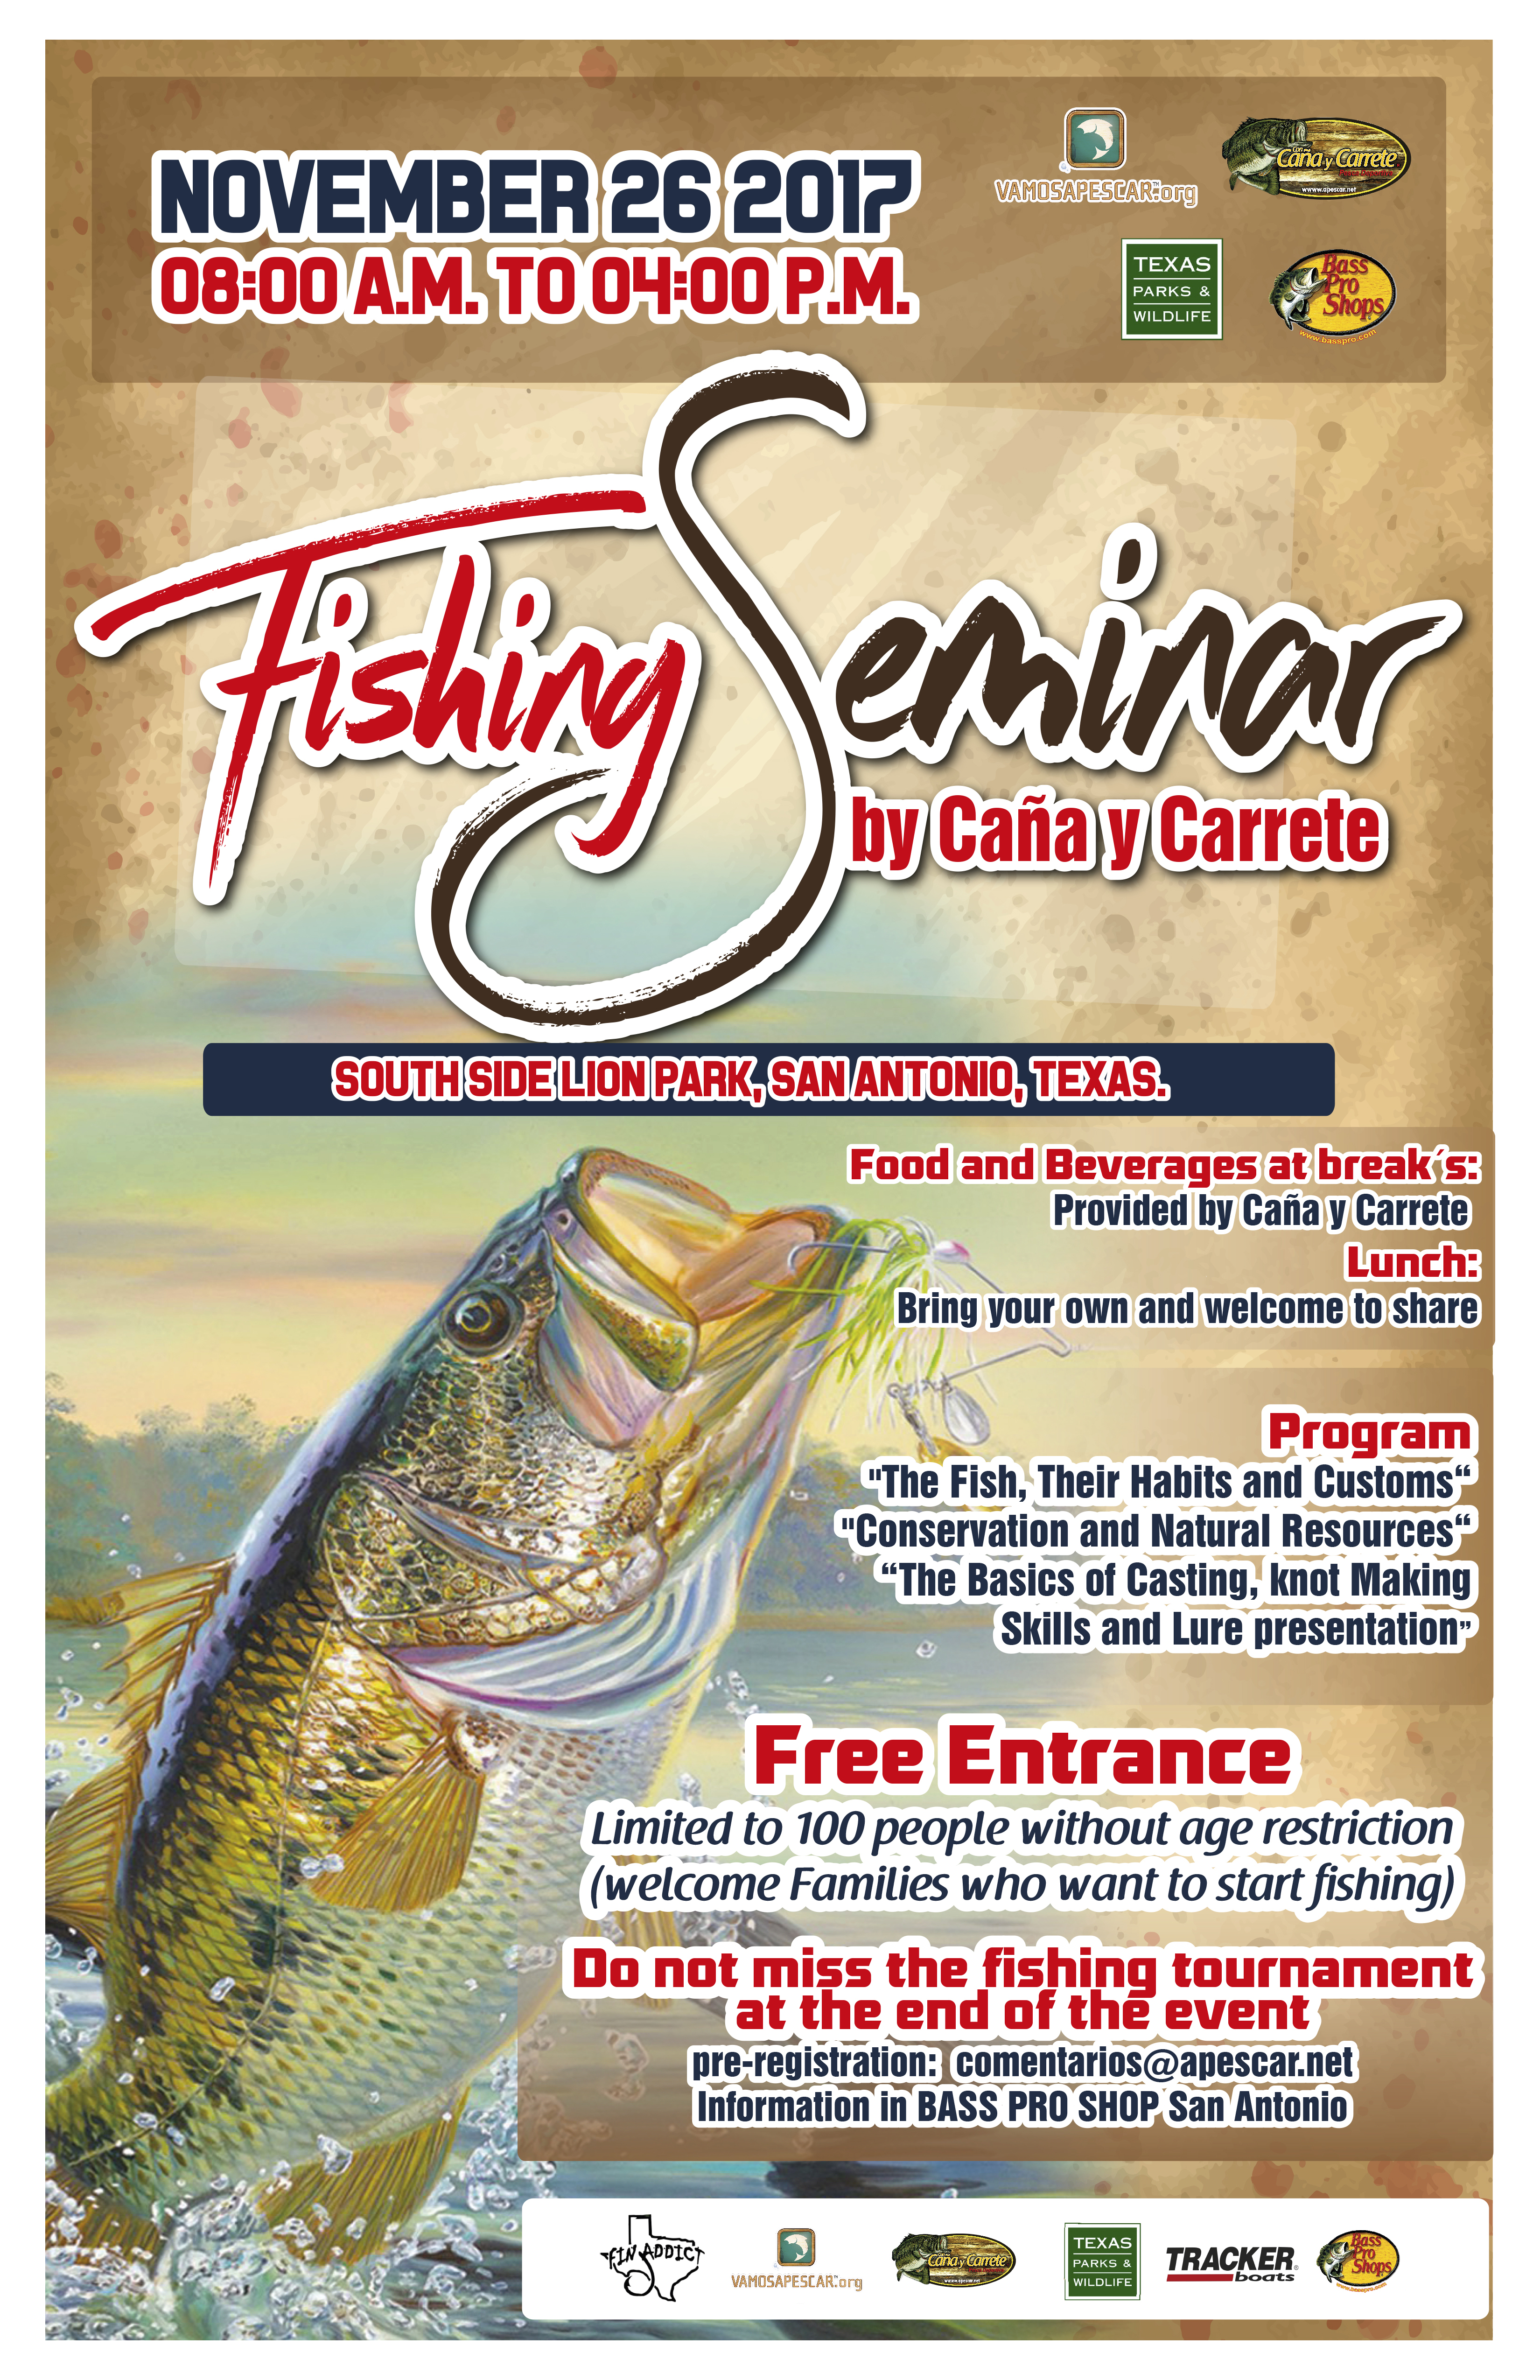 Nov 26 fishing event flyer.jpg